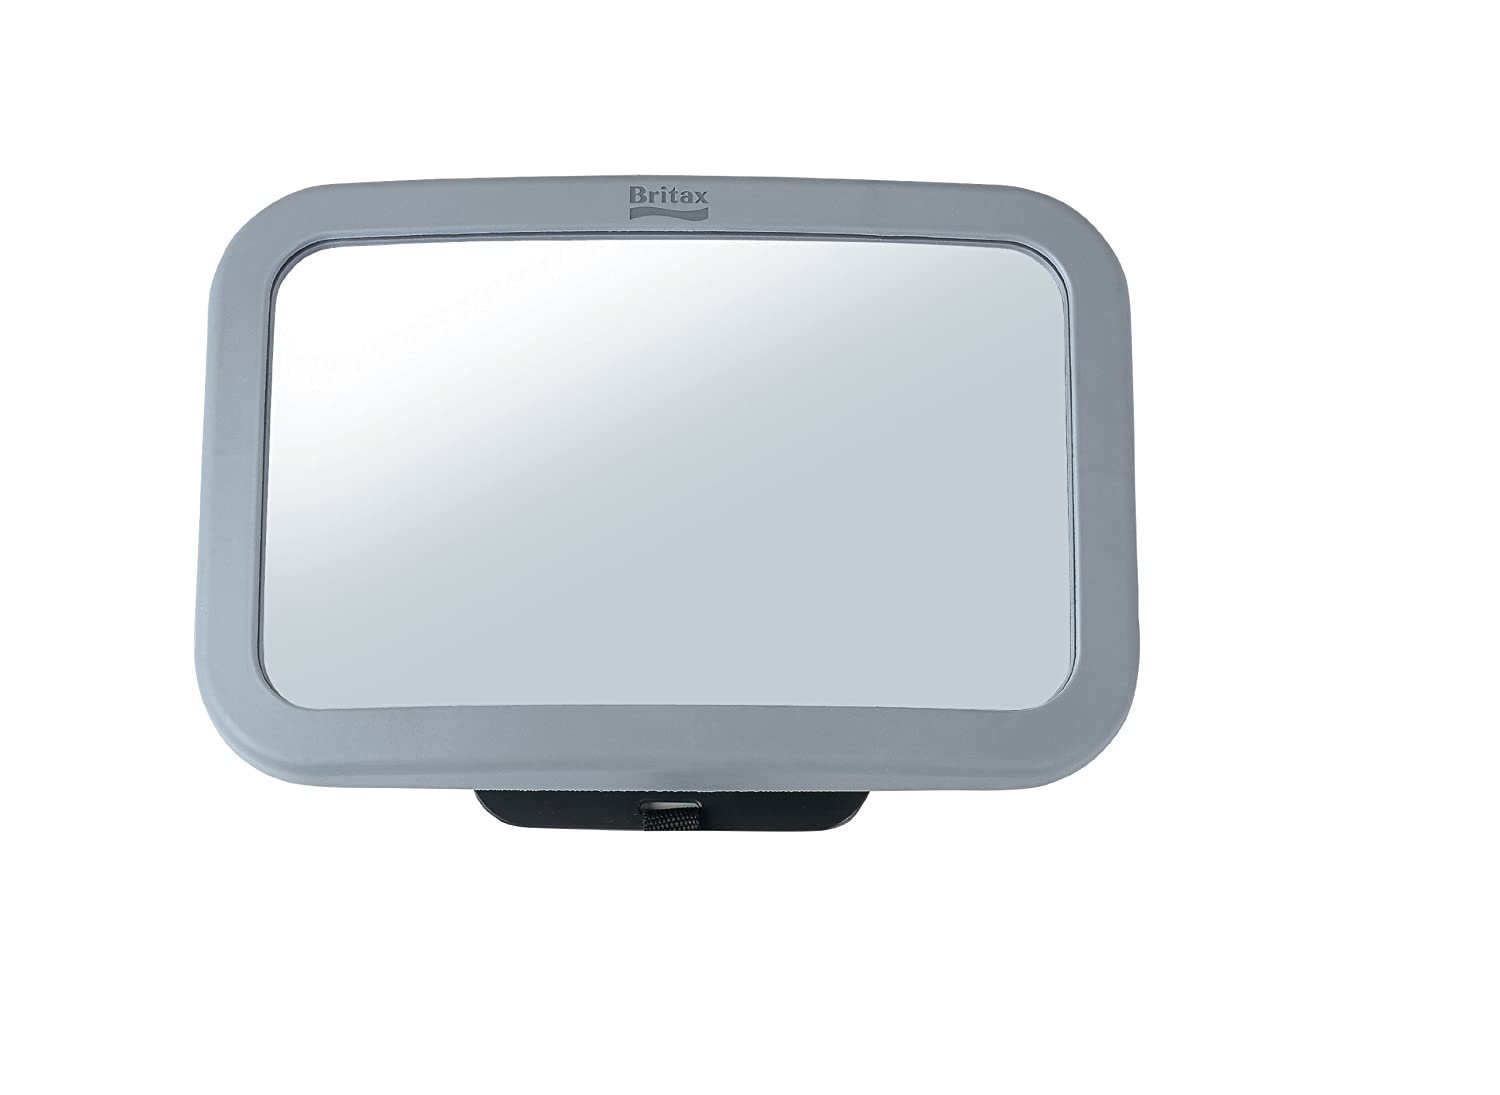 Britax Römer Original accessory, baby rear-view mirror.